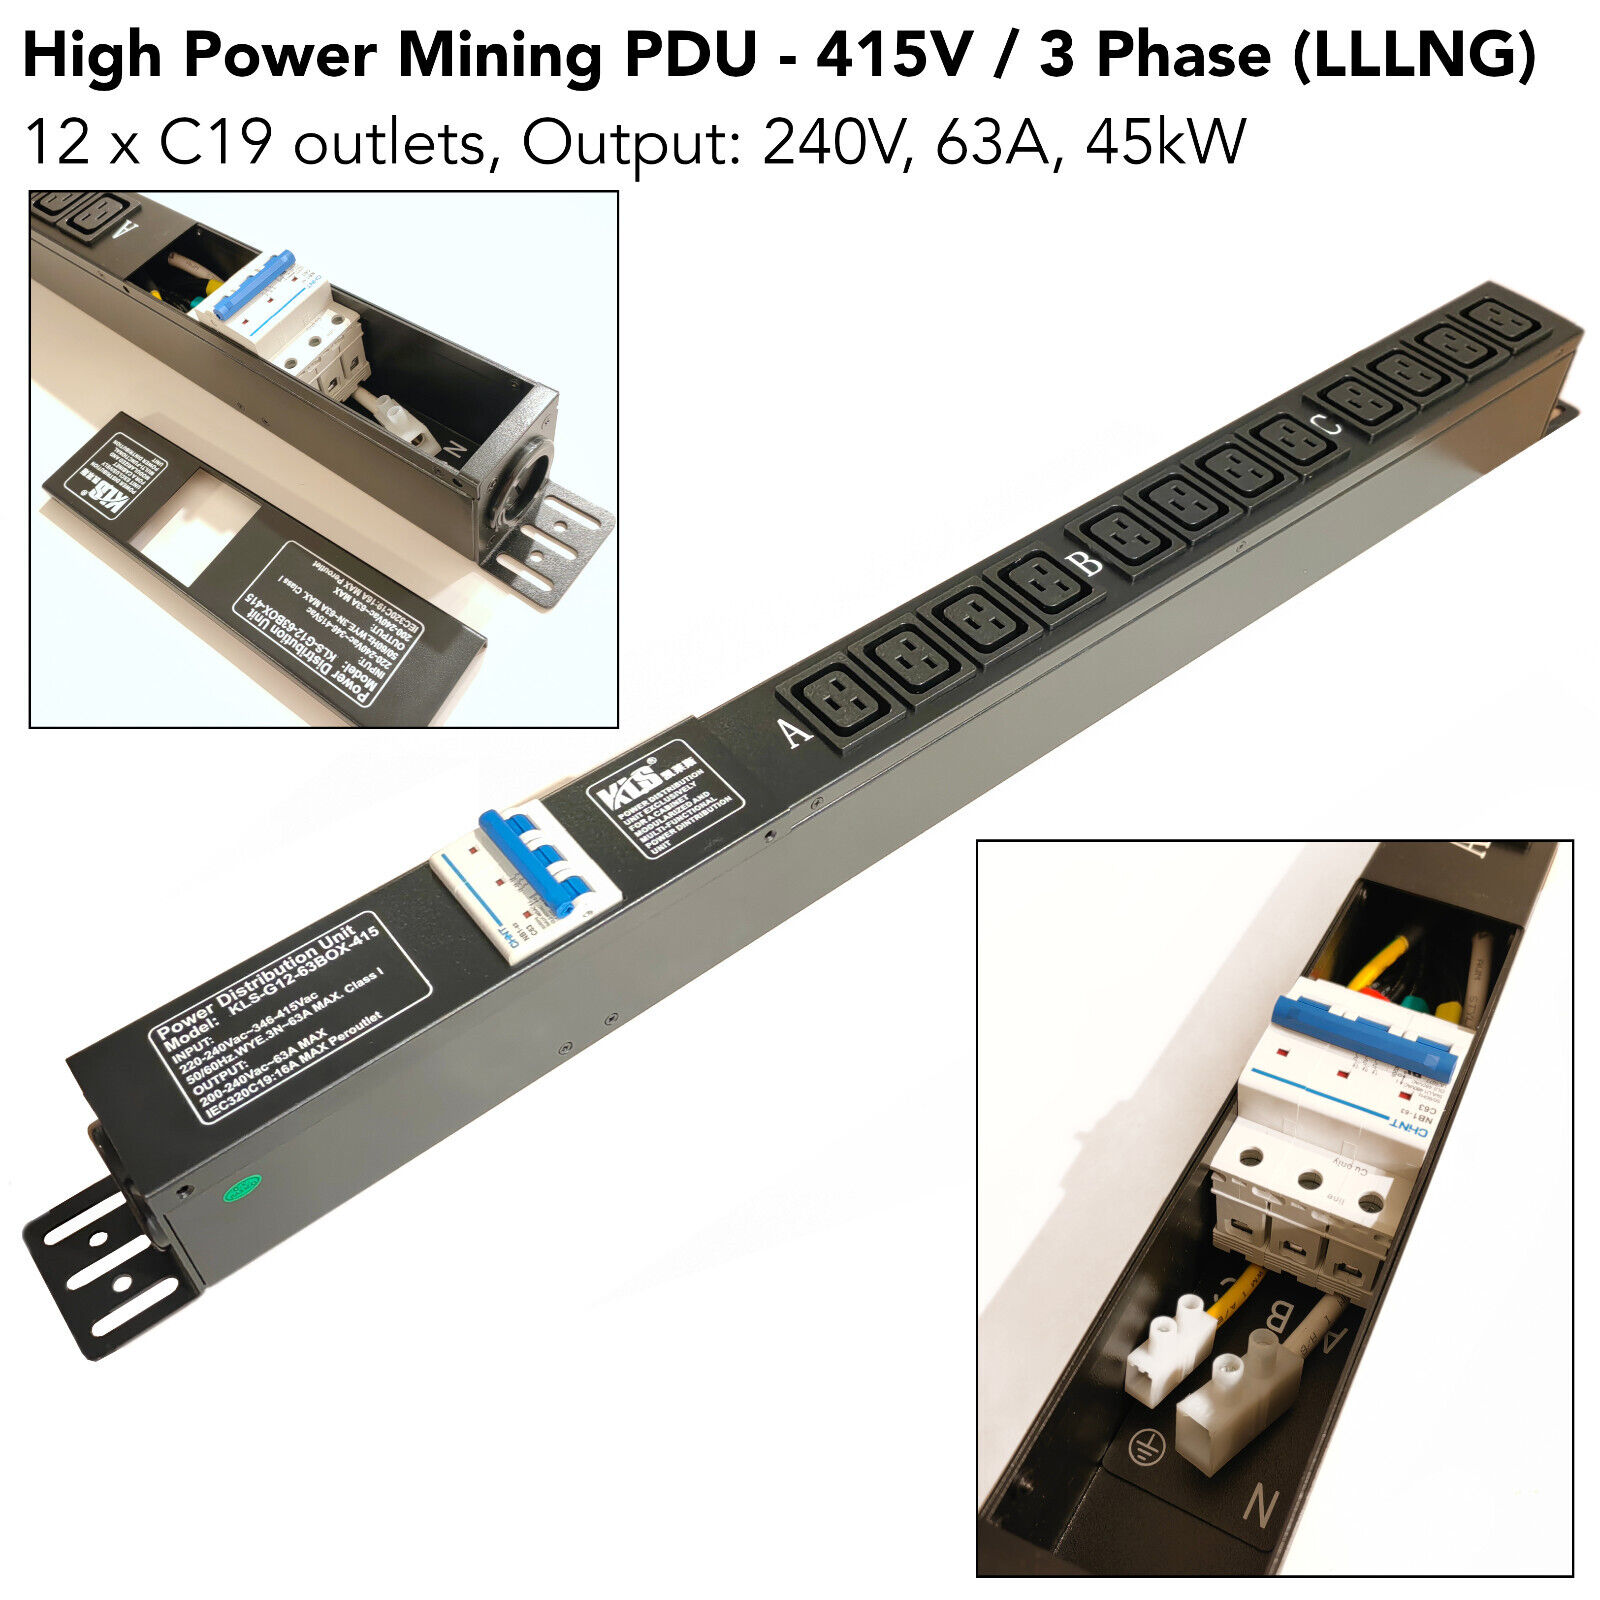 High Power Mining PDU 415V / 3 Phase (LLLNG) 12xC19 - Output 240V 63A Amp 45kW